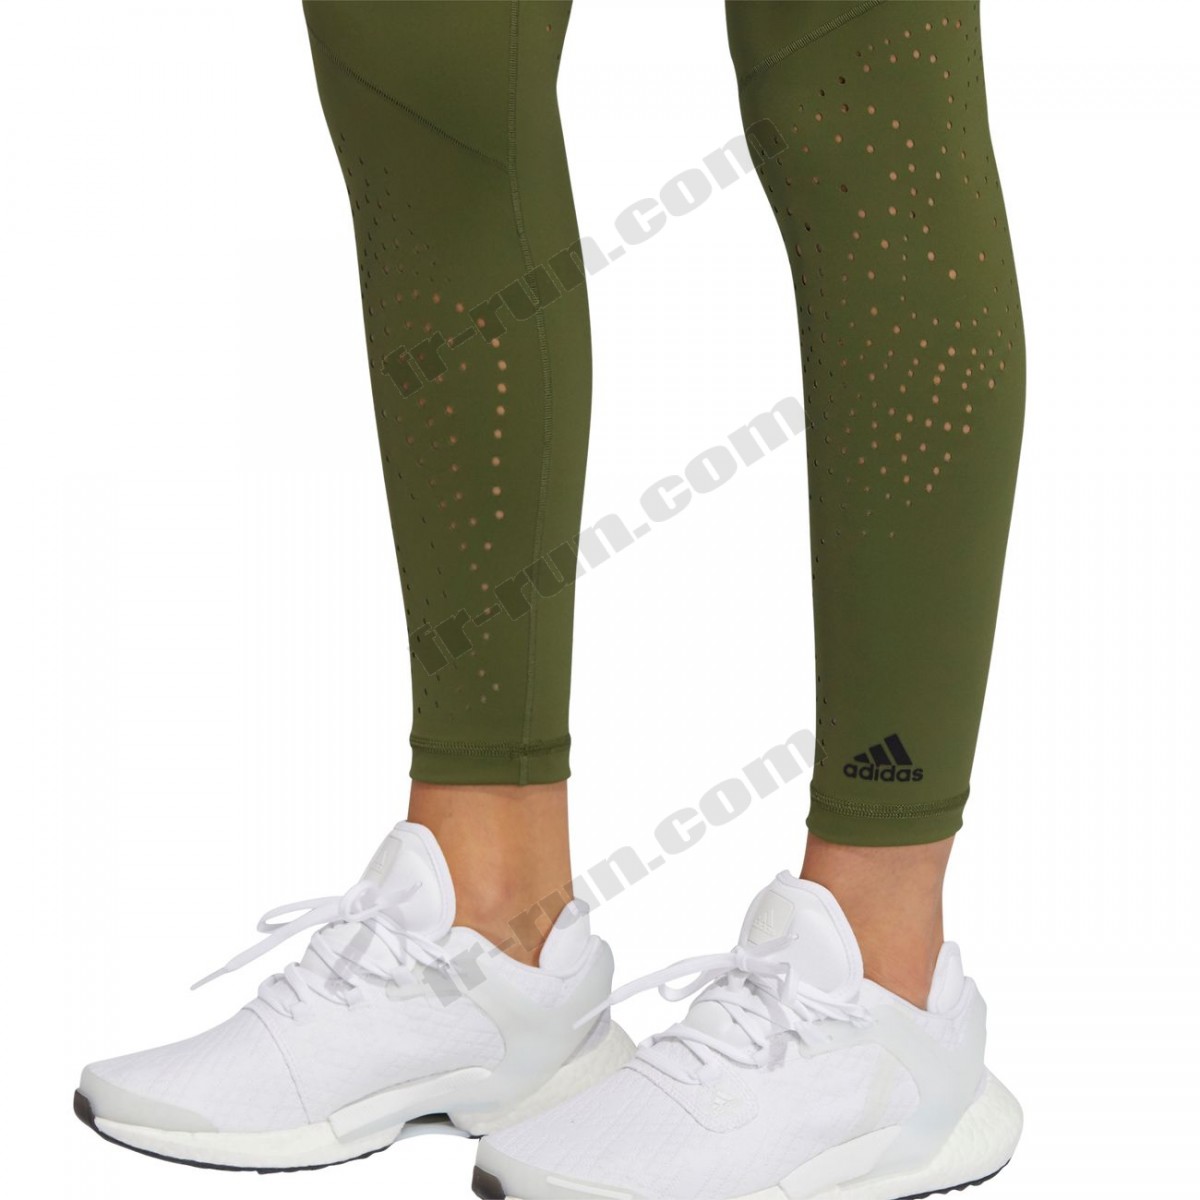 Adidas/running femme ADIDAS Adidas Believe This 20 Perfect ◇◇◇ Pas Cher Du Tout - -12